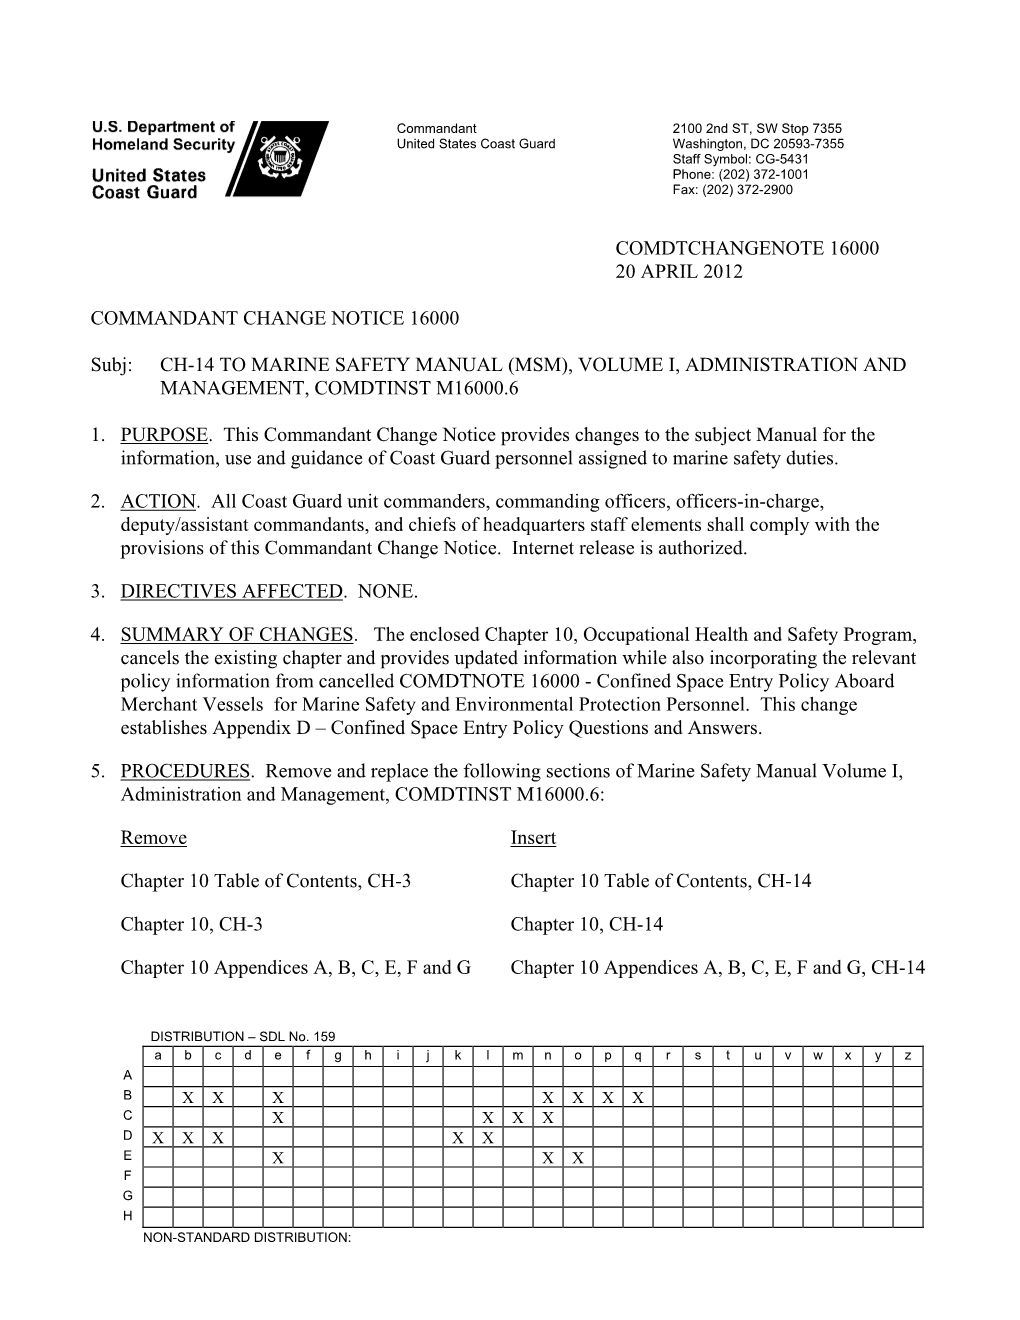 Marine Safety Manual, Volume I, Administration and Management, Comdtinst M16000.6